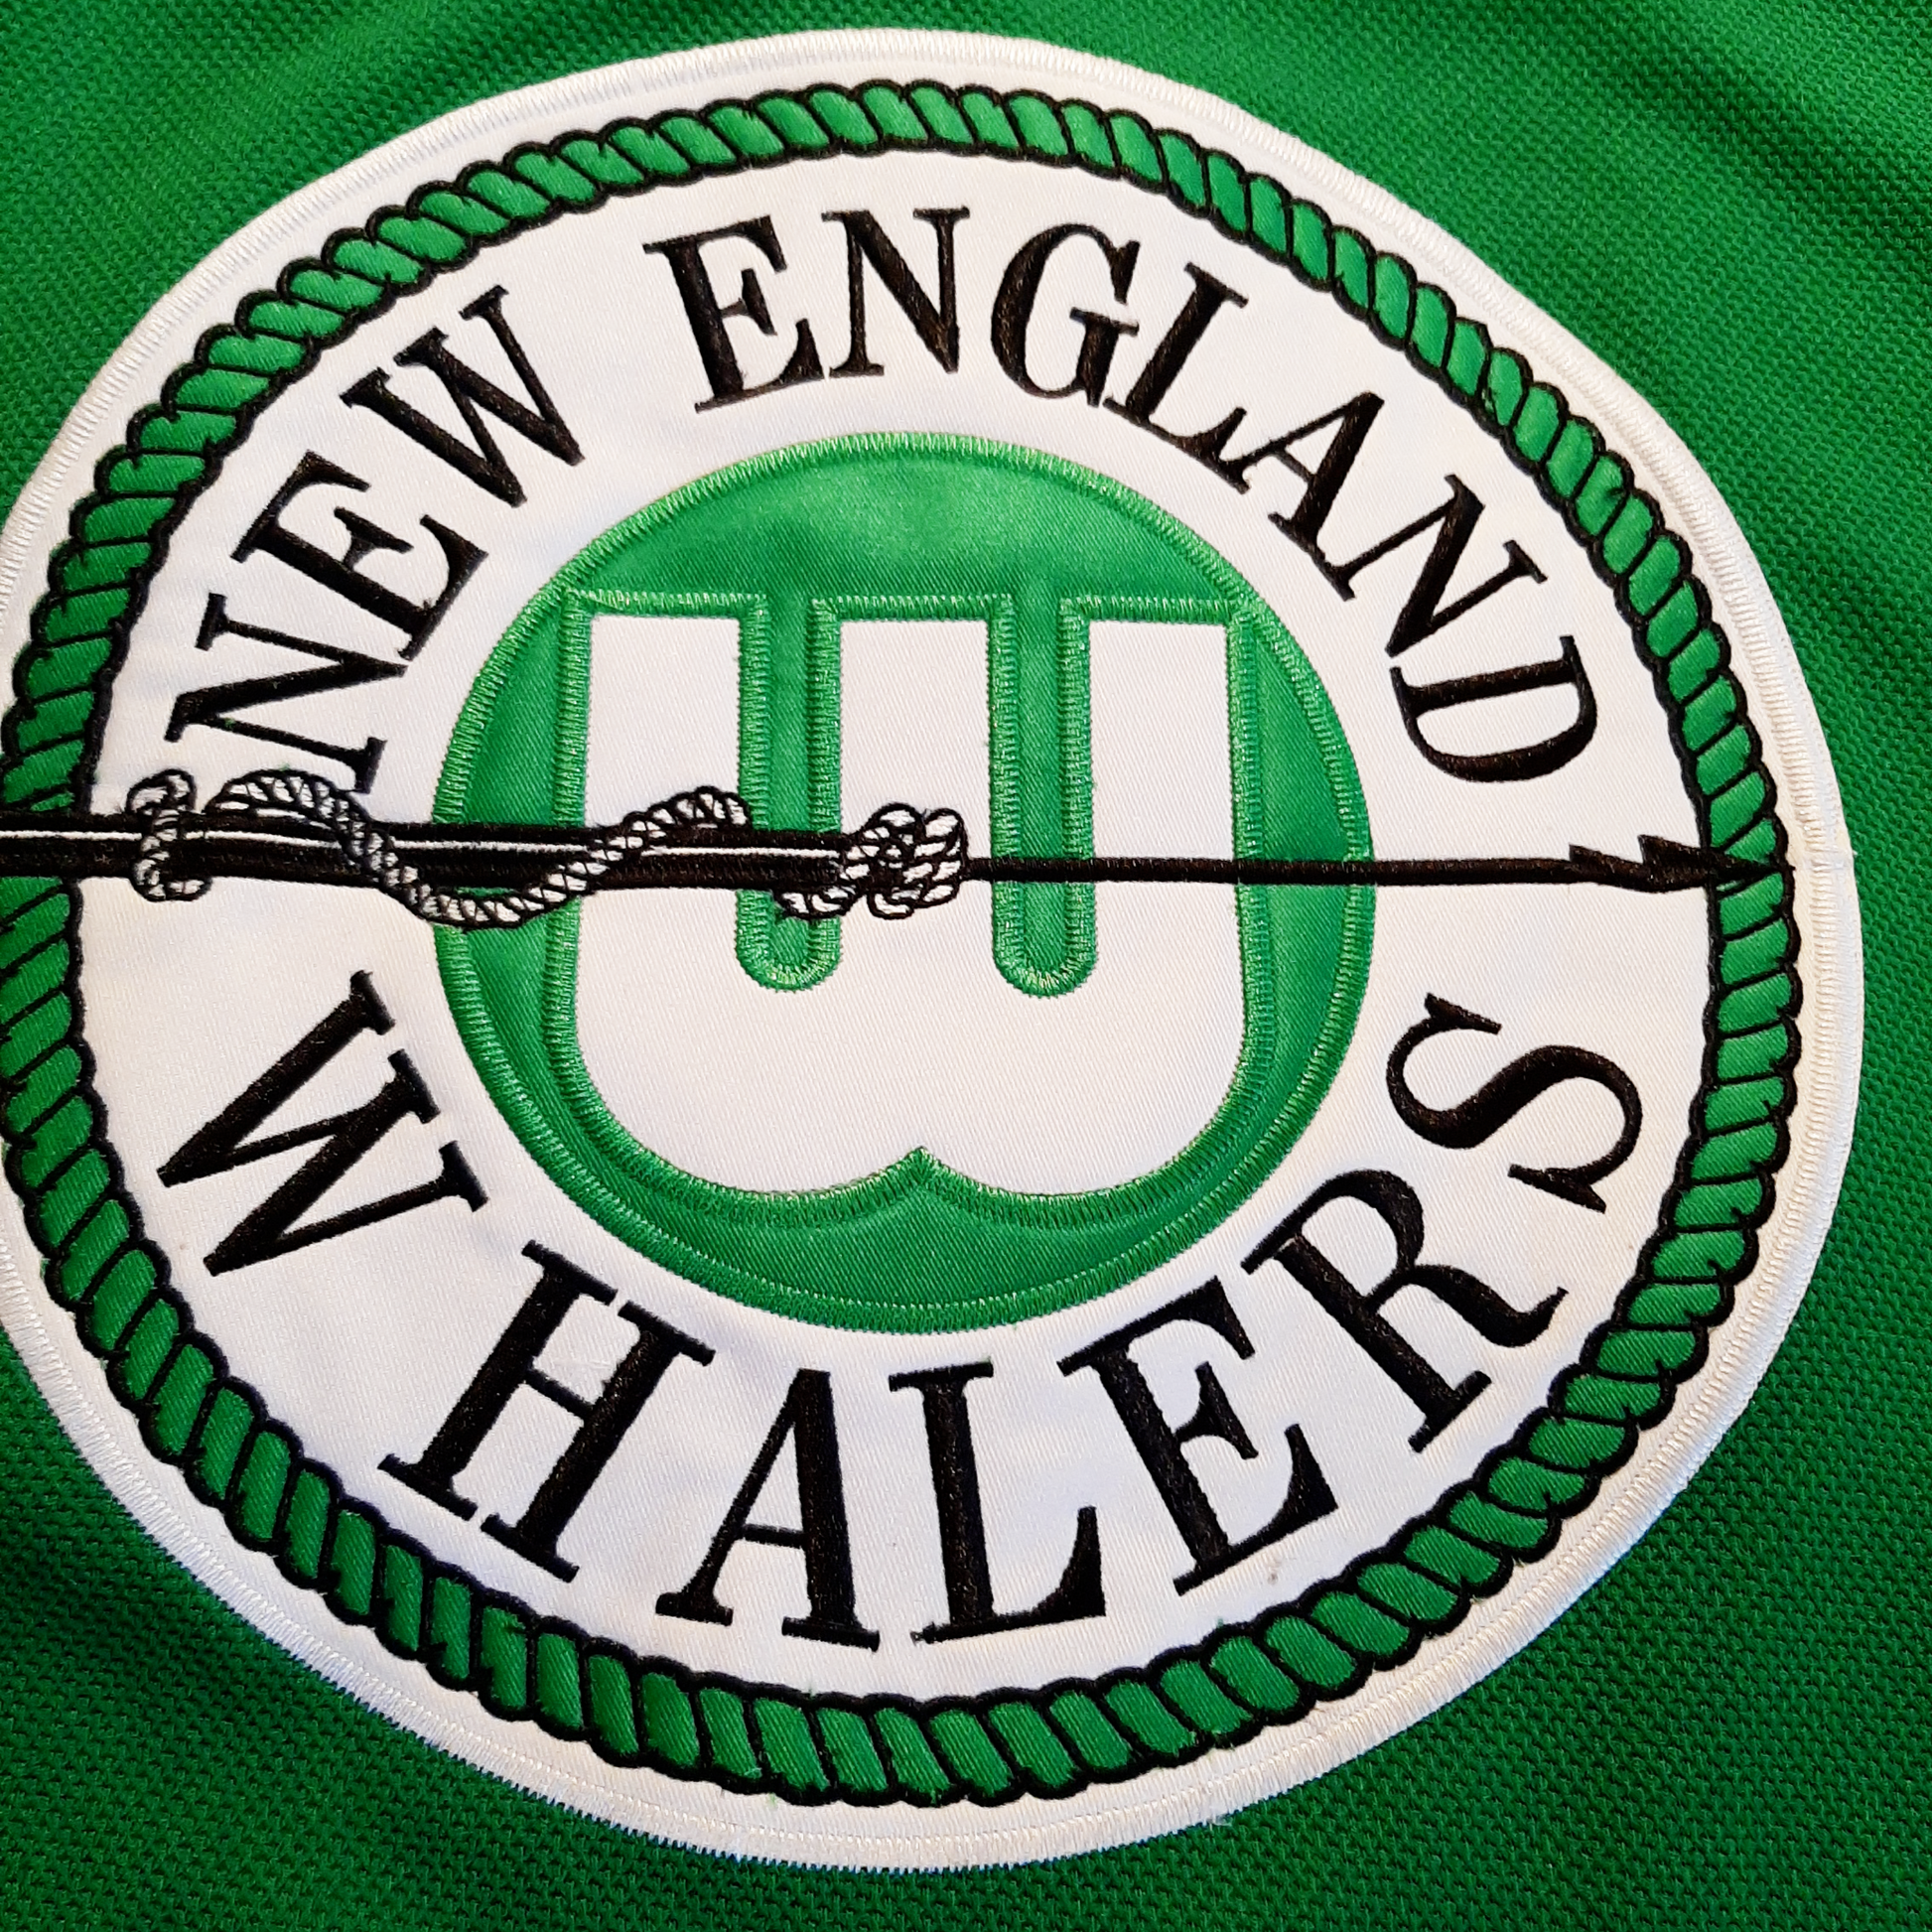 GORDIE HOWE New England Whalers WHA Throwback Home Hockey Jersey - Custom  Throwback Jerseys